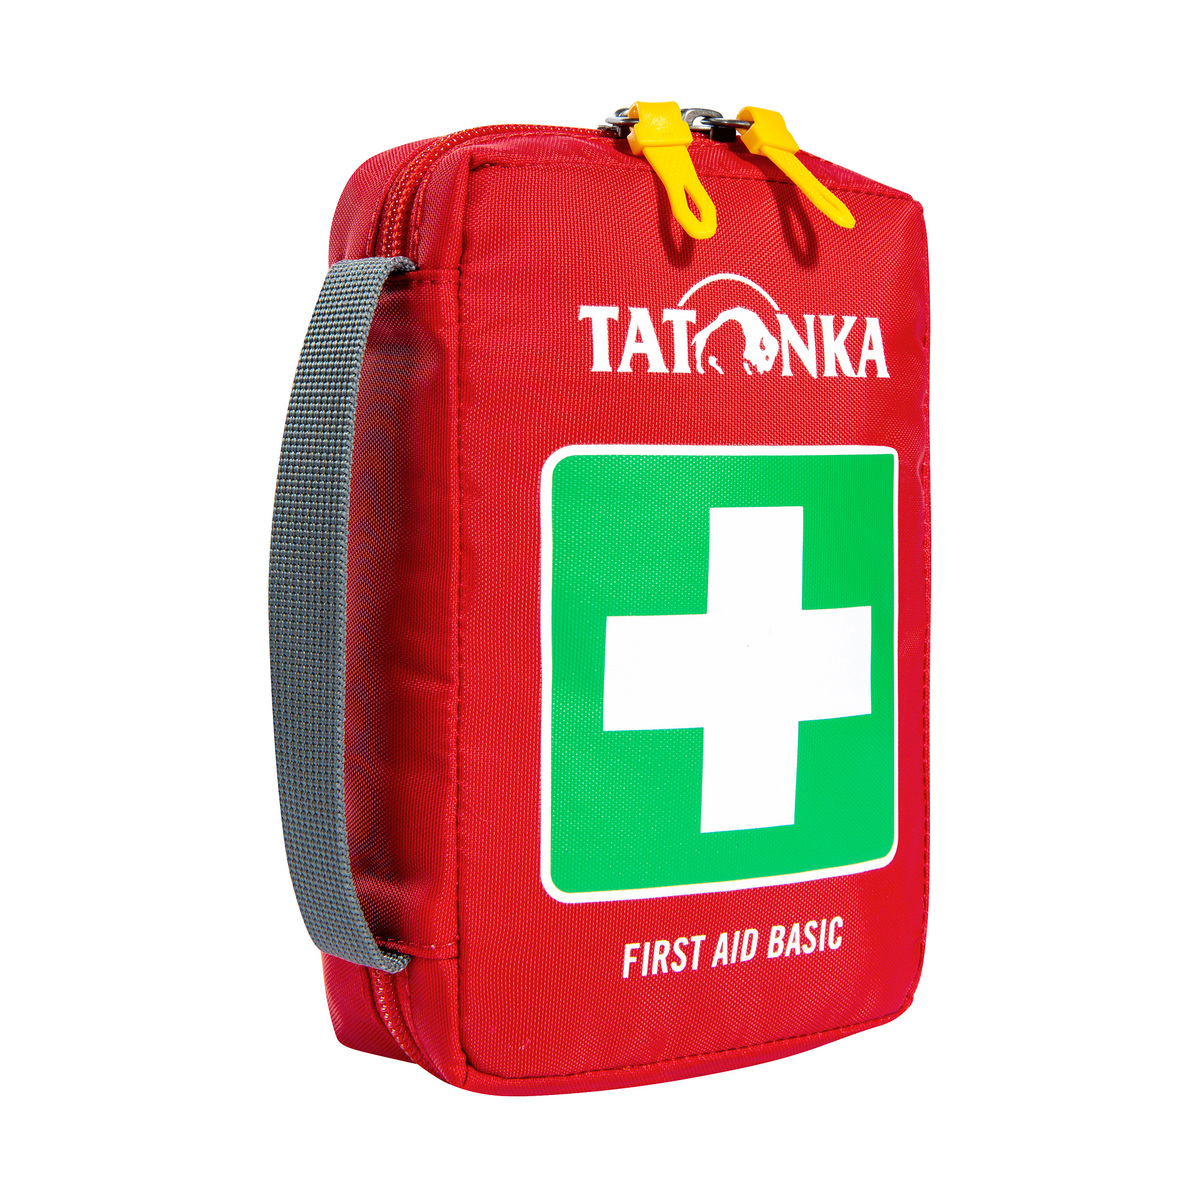  Tatonka First Aid Basic